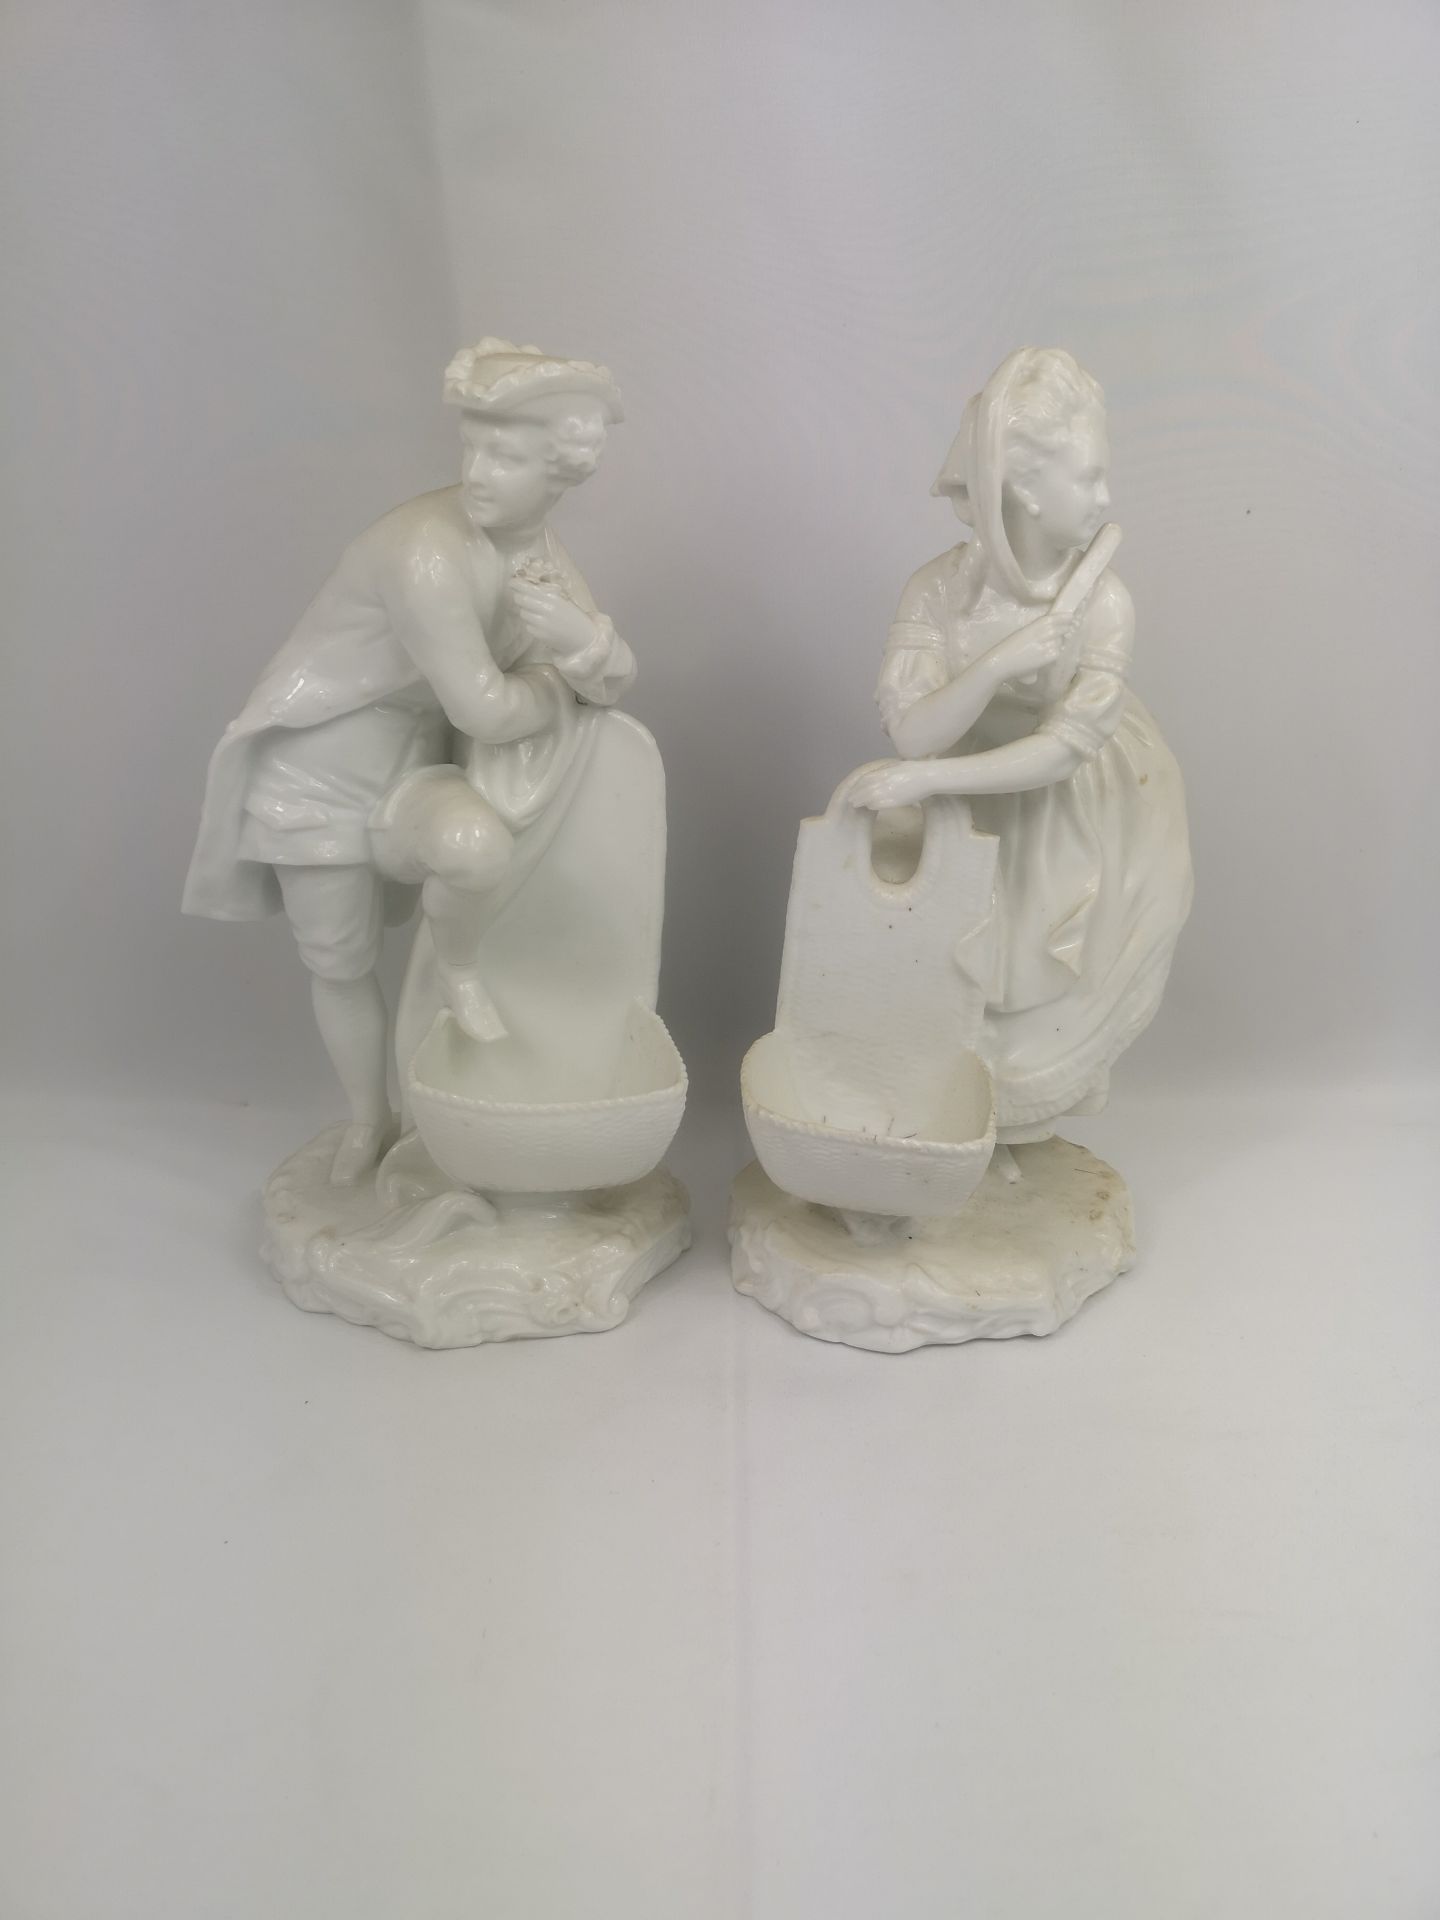 Two Meissen style porcelain figures